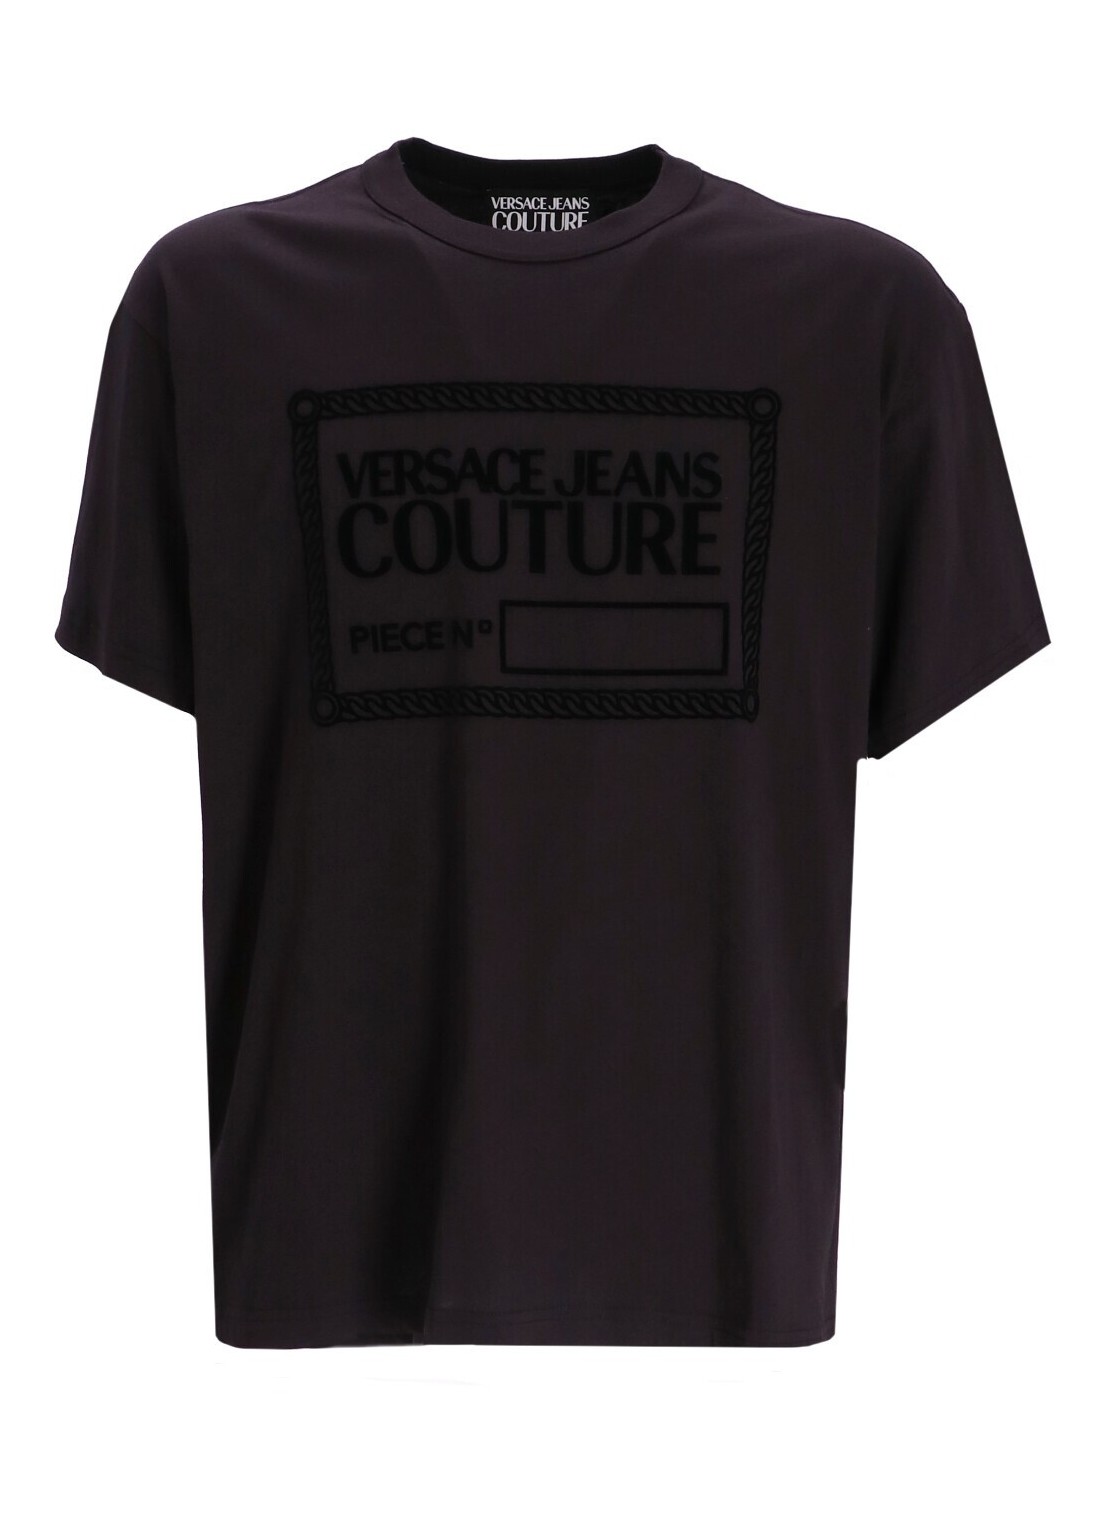 Camiseta versace t-shirt man 75up601 r piece nr flock 75gaht11 899 talla XL
 